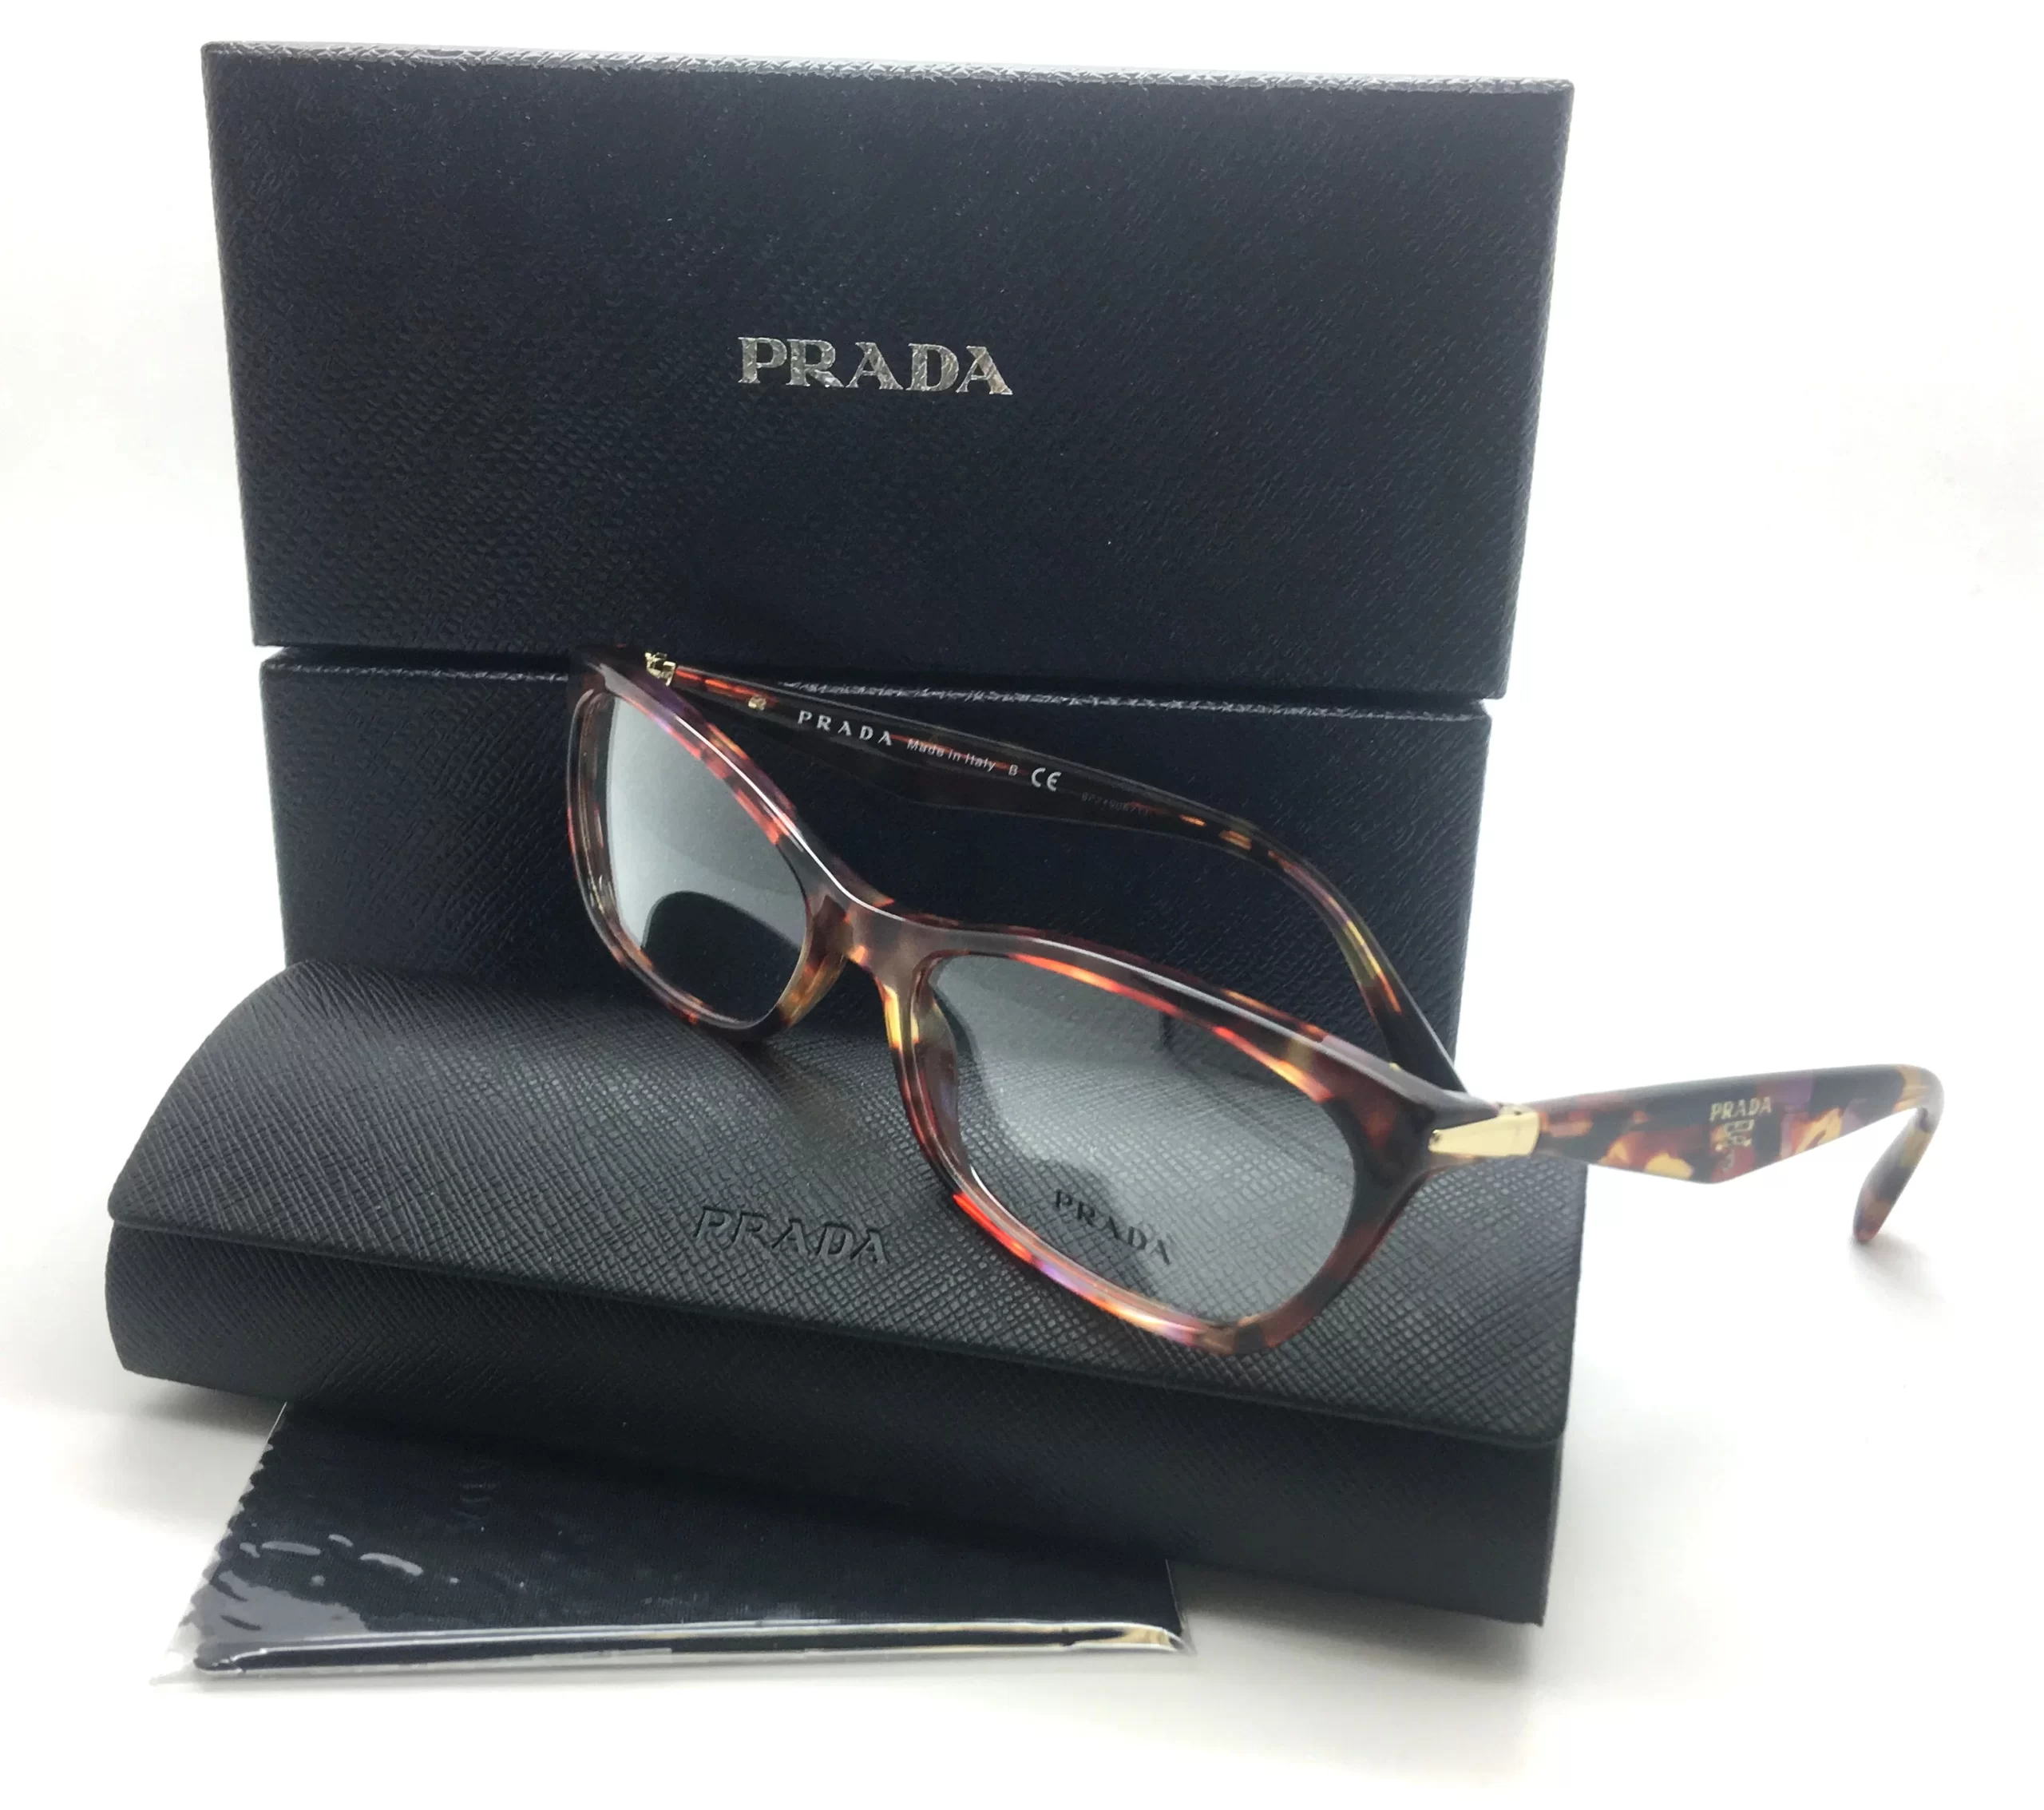 Prada Eyeglasses: Where Modernity Meets Timeless Sophistication